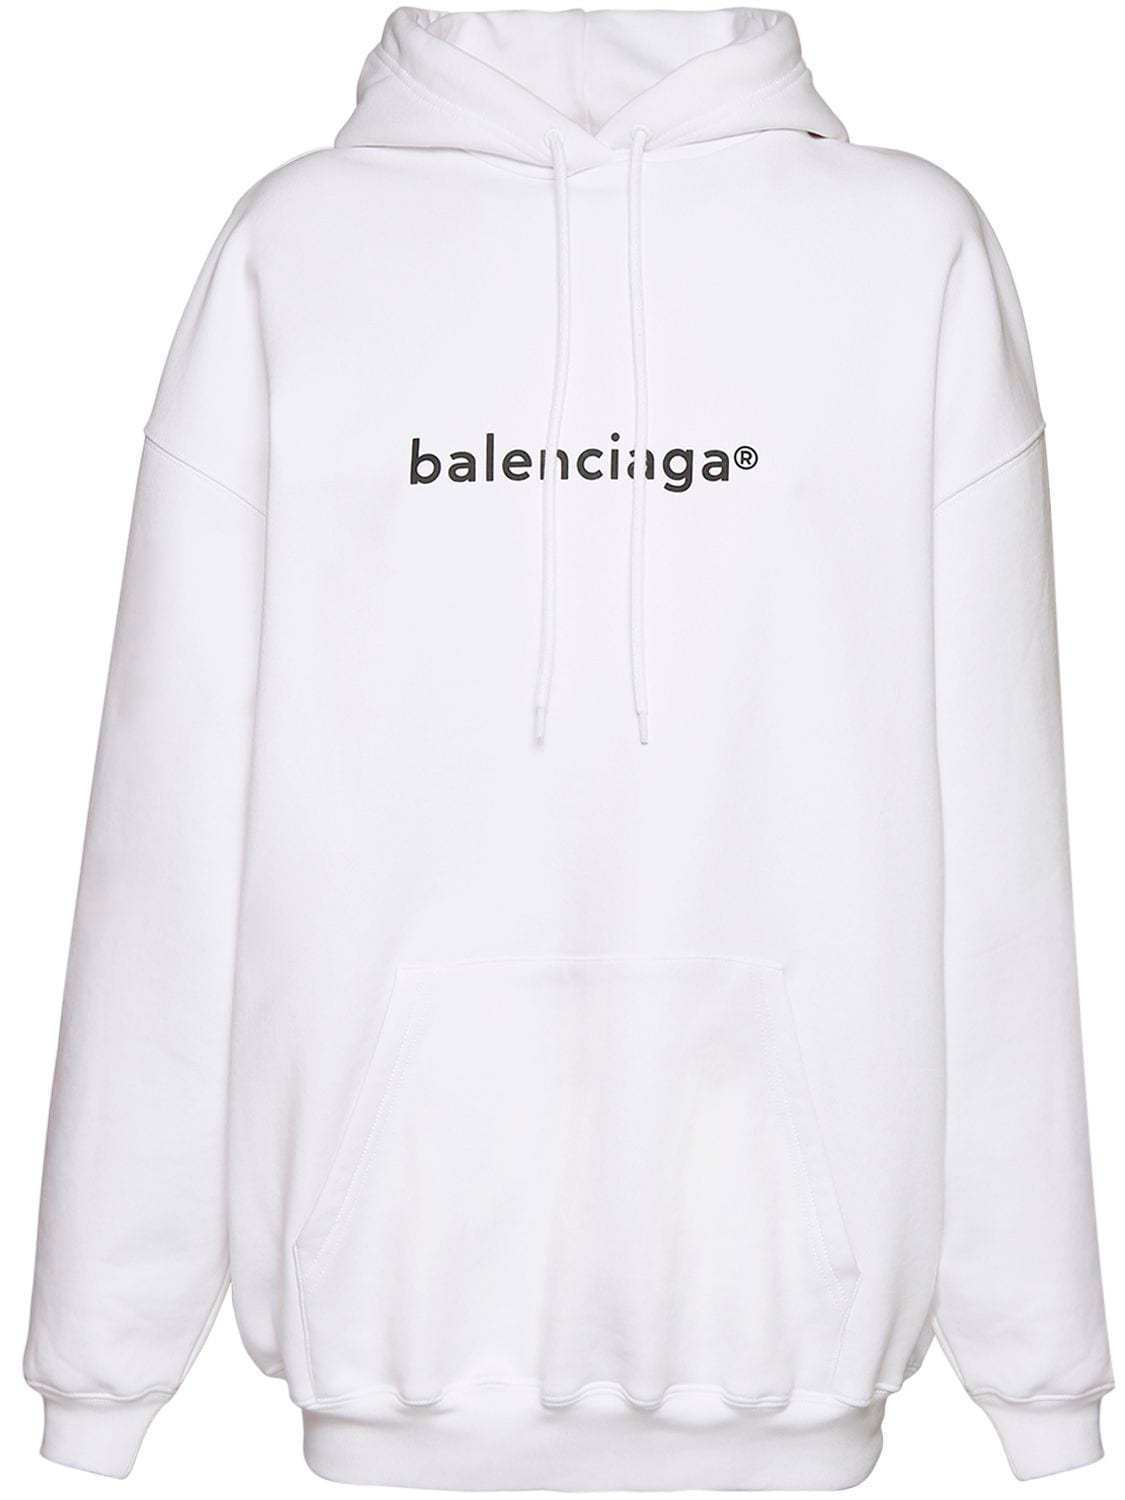 balenciaga hoodie logo white